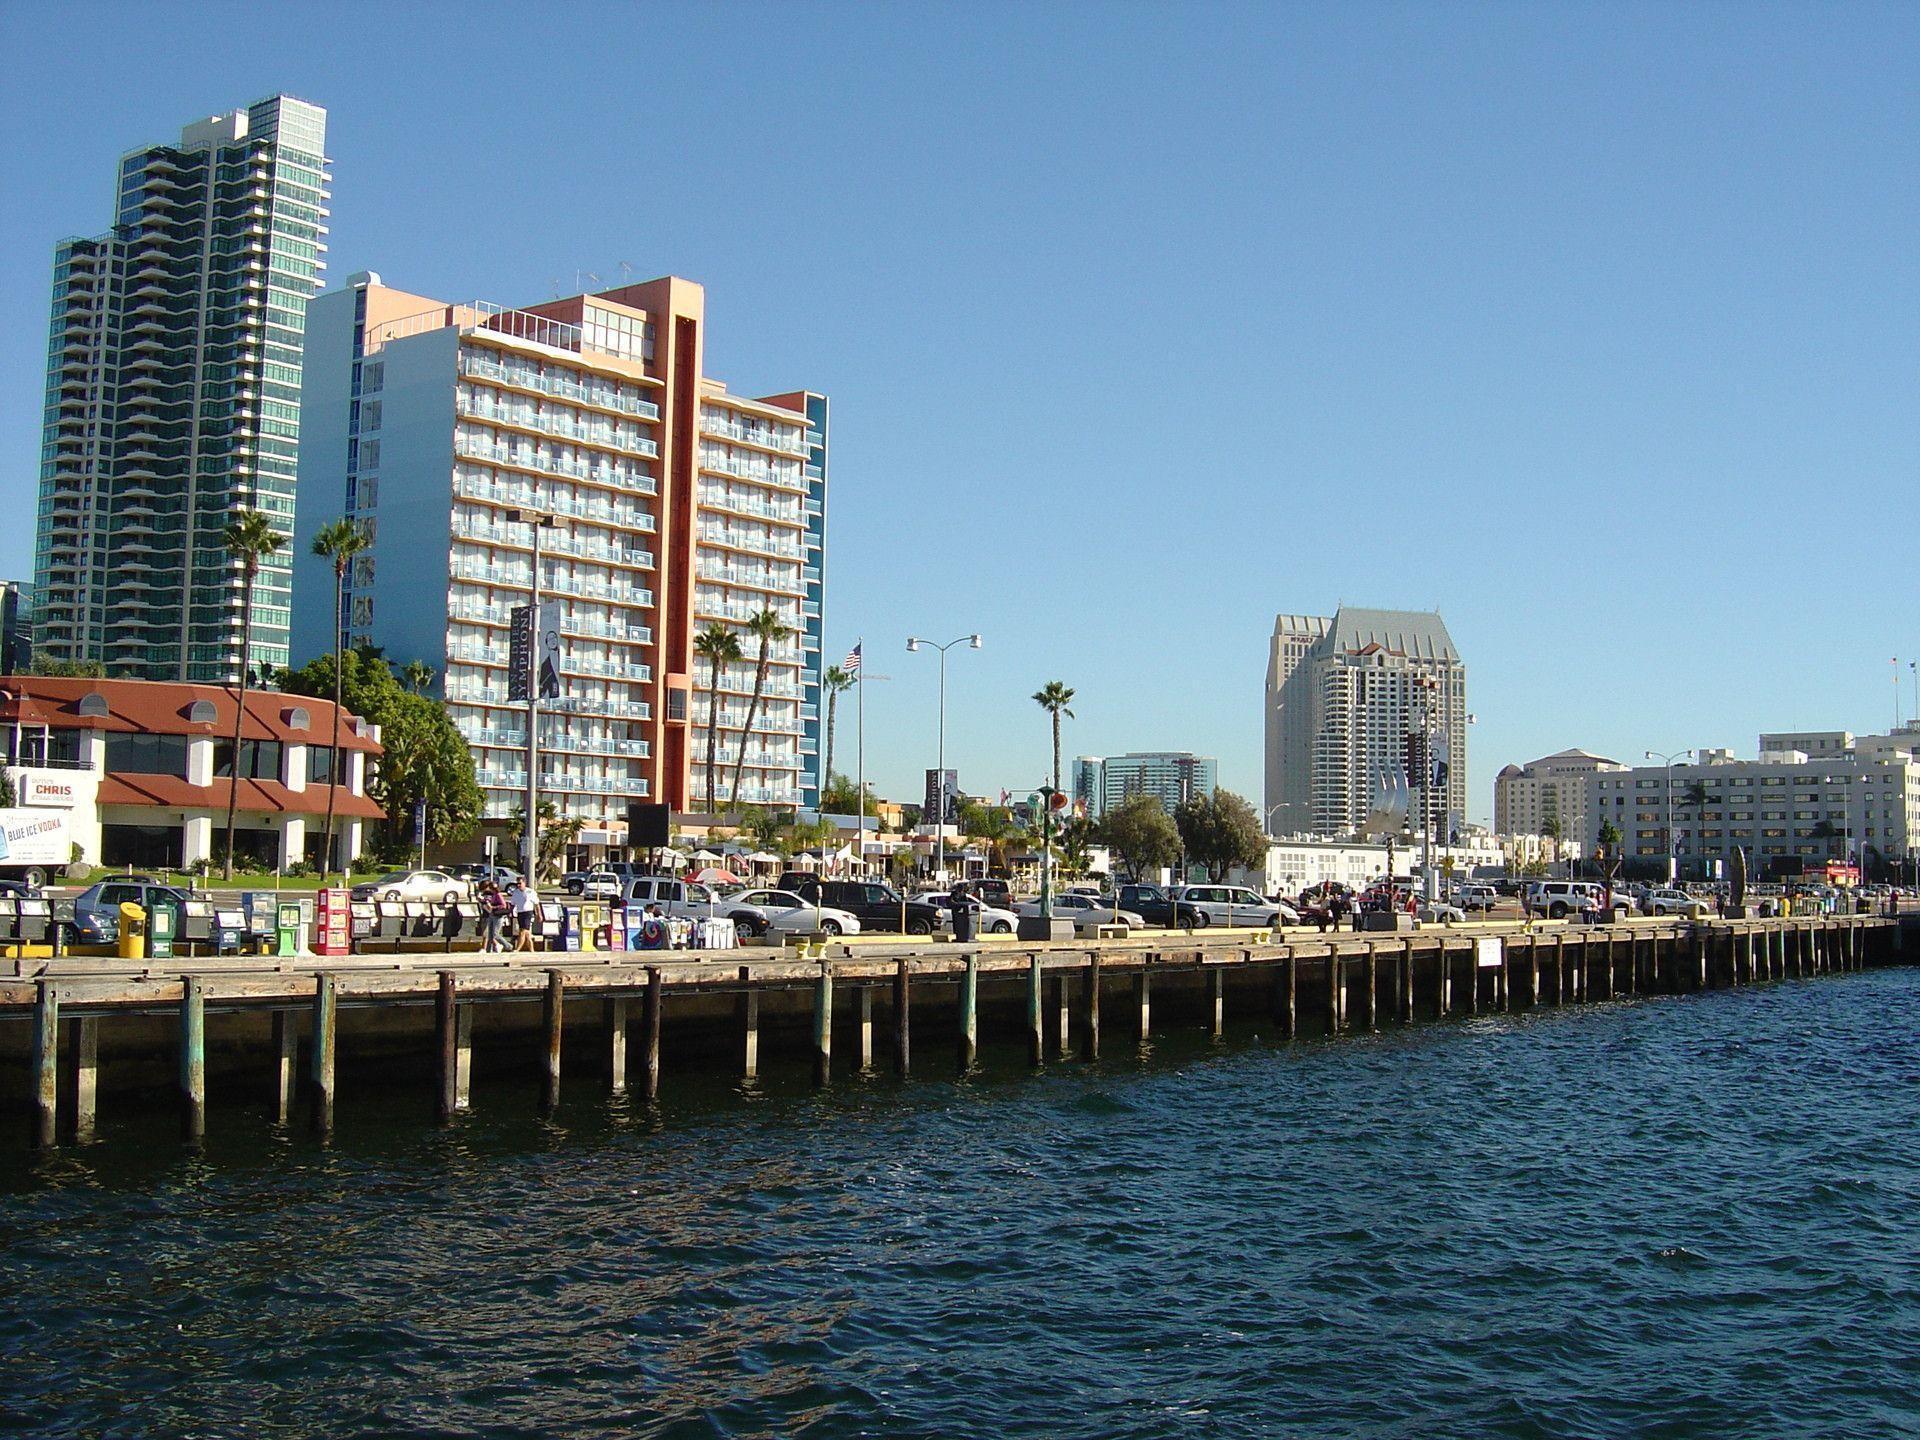 San Diego Harbor